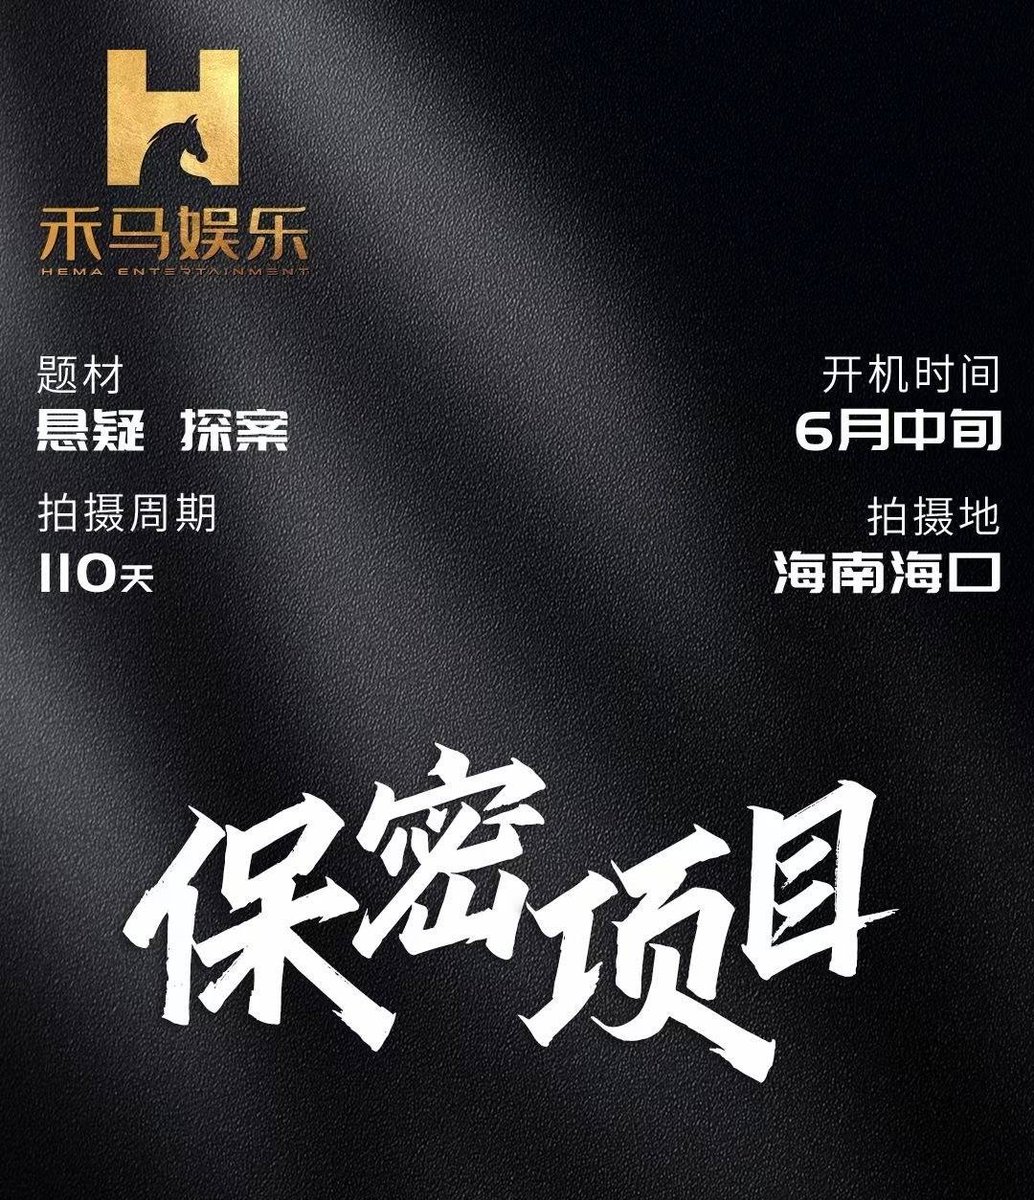 🎬 Drama #火场追凶 prepared to be filming.
Director/Screenwriter : Xing Jianjun
Starring : #XuKai 
Start filming : mid June 2024
Location : Hainan, Haikou
Filming period : 110 days